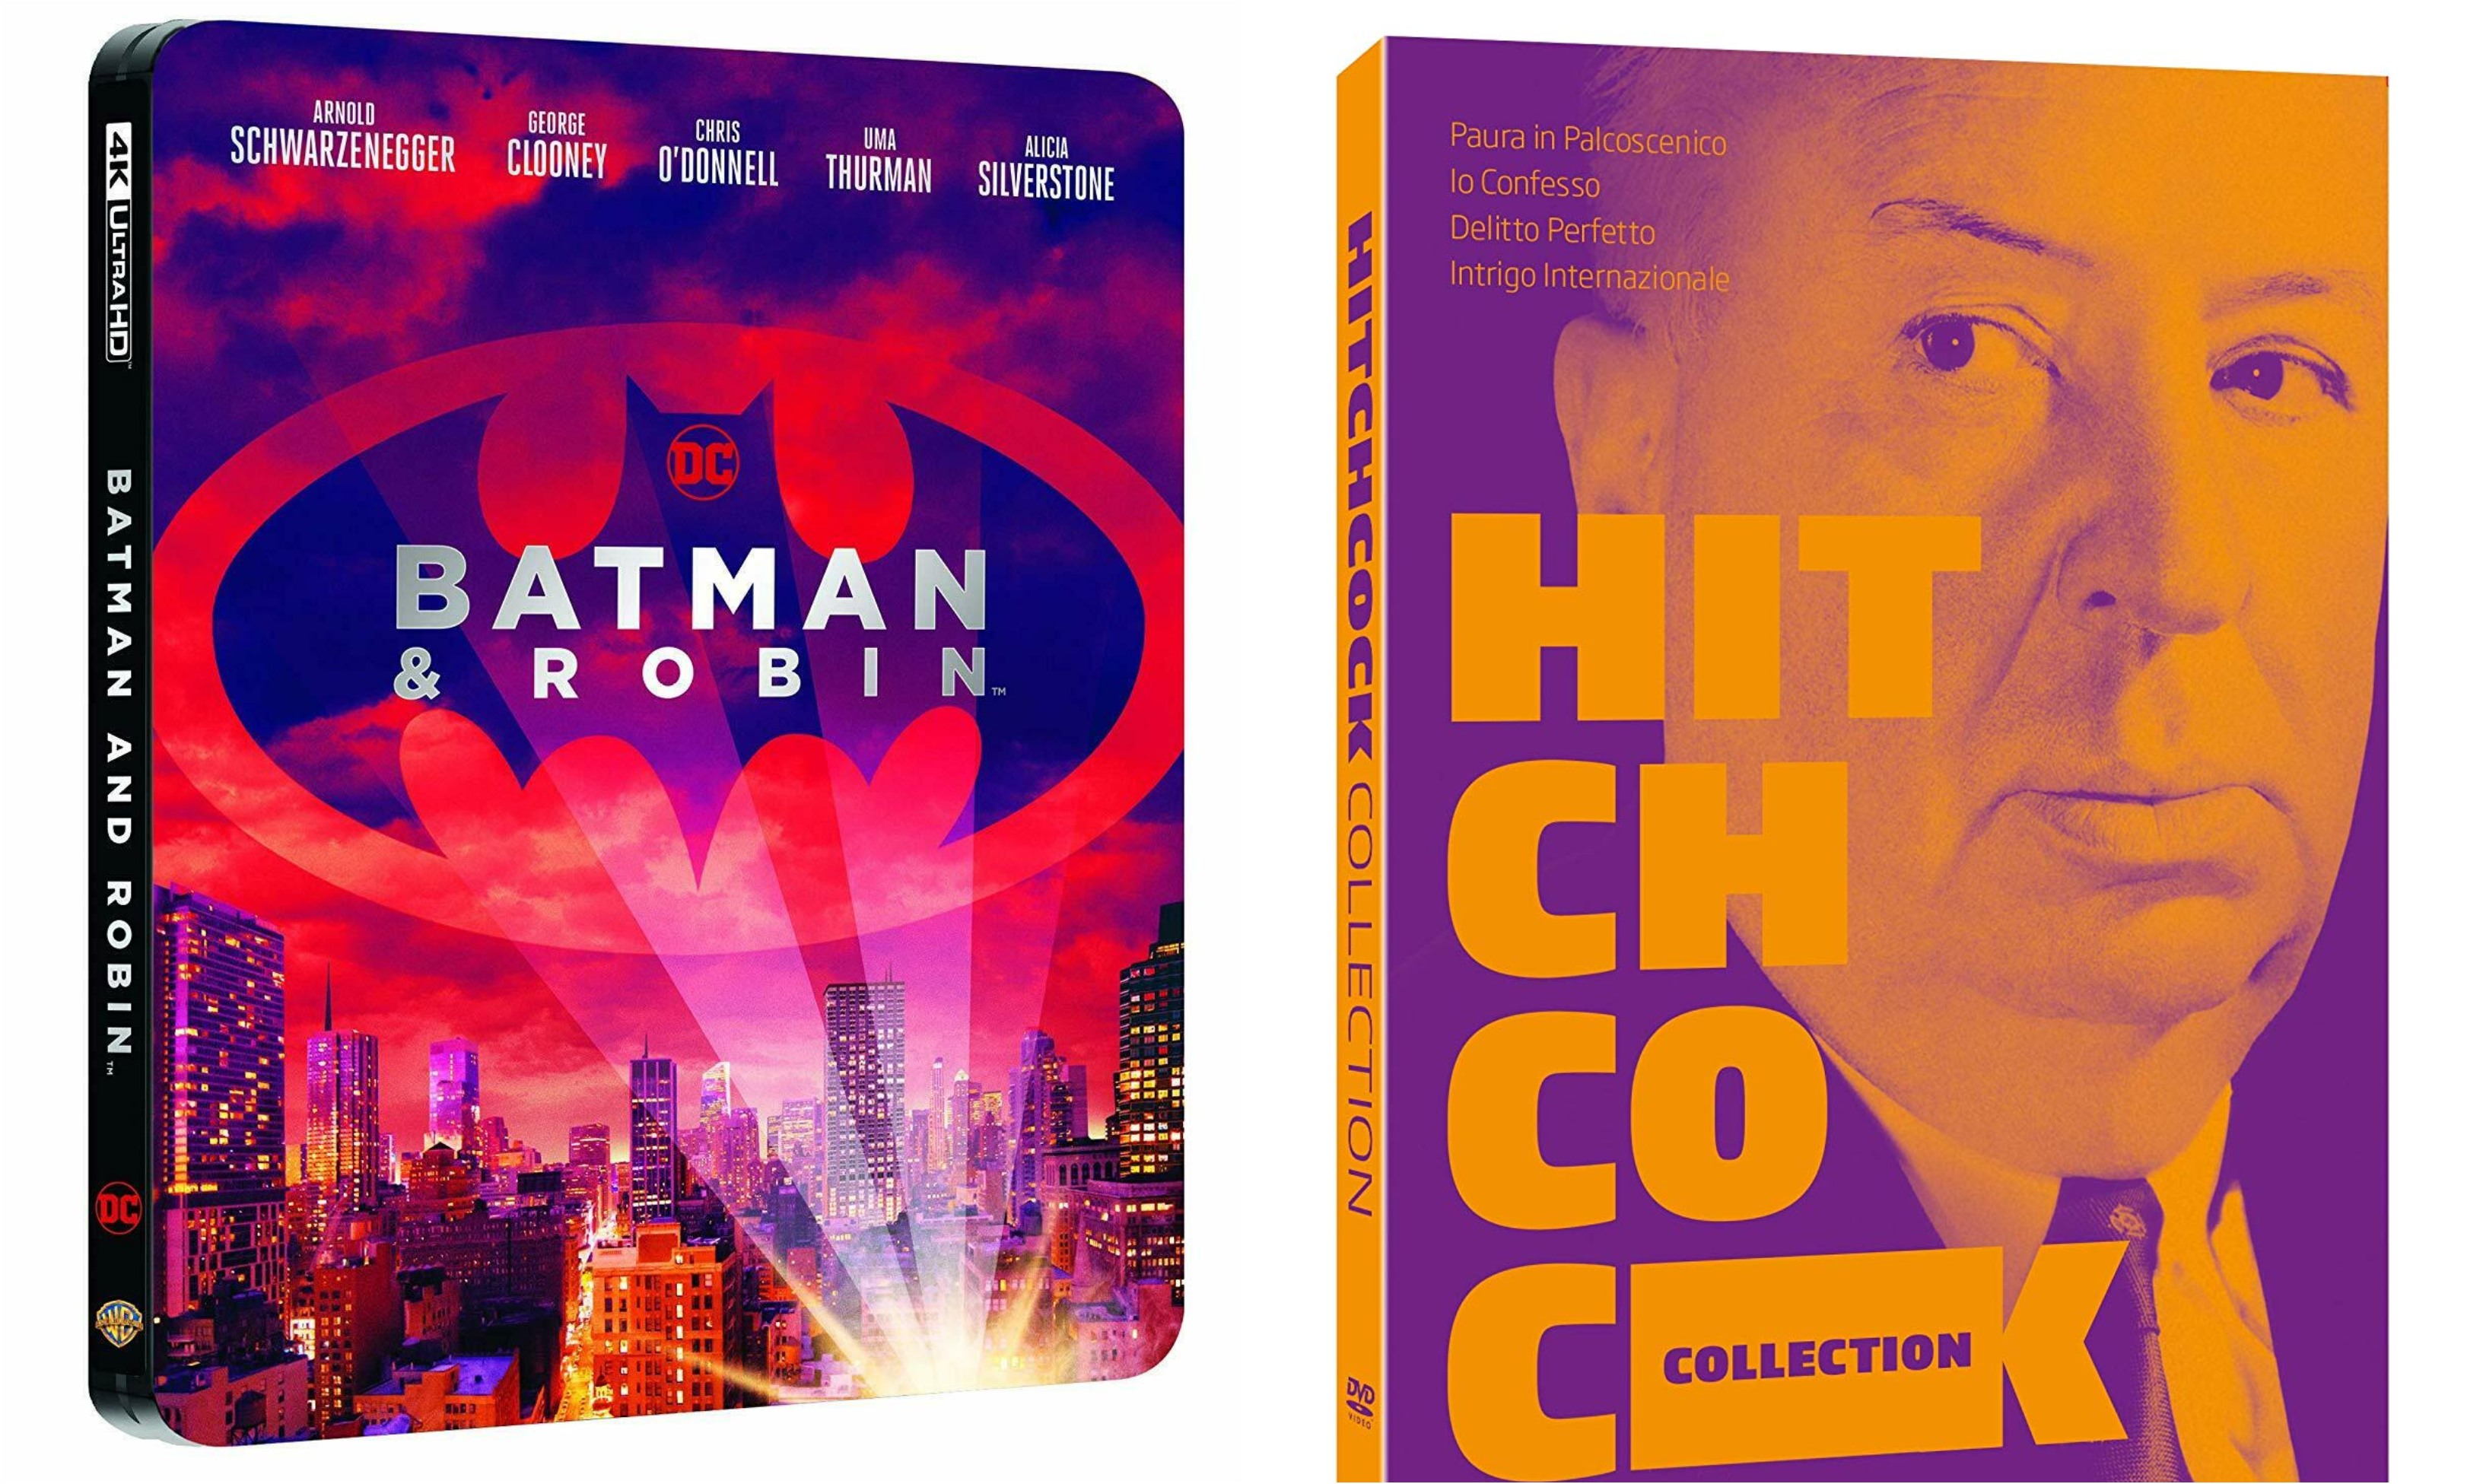 Home video Warner Bros: “Batman & Robin” 4K e “Hitchcock collection” in DVD